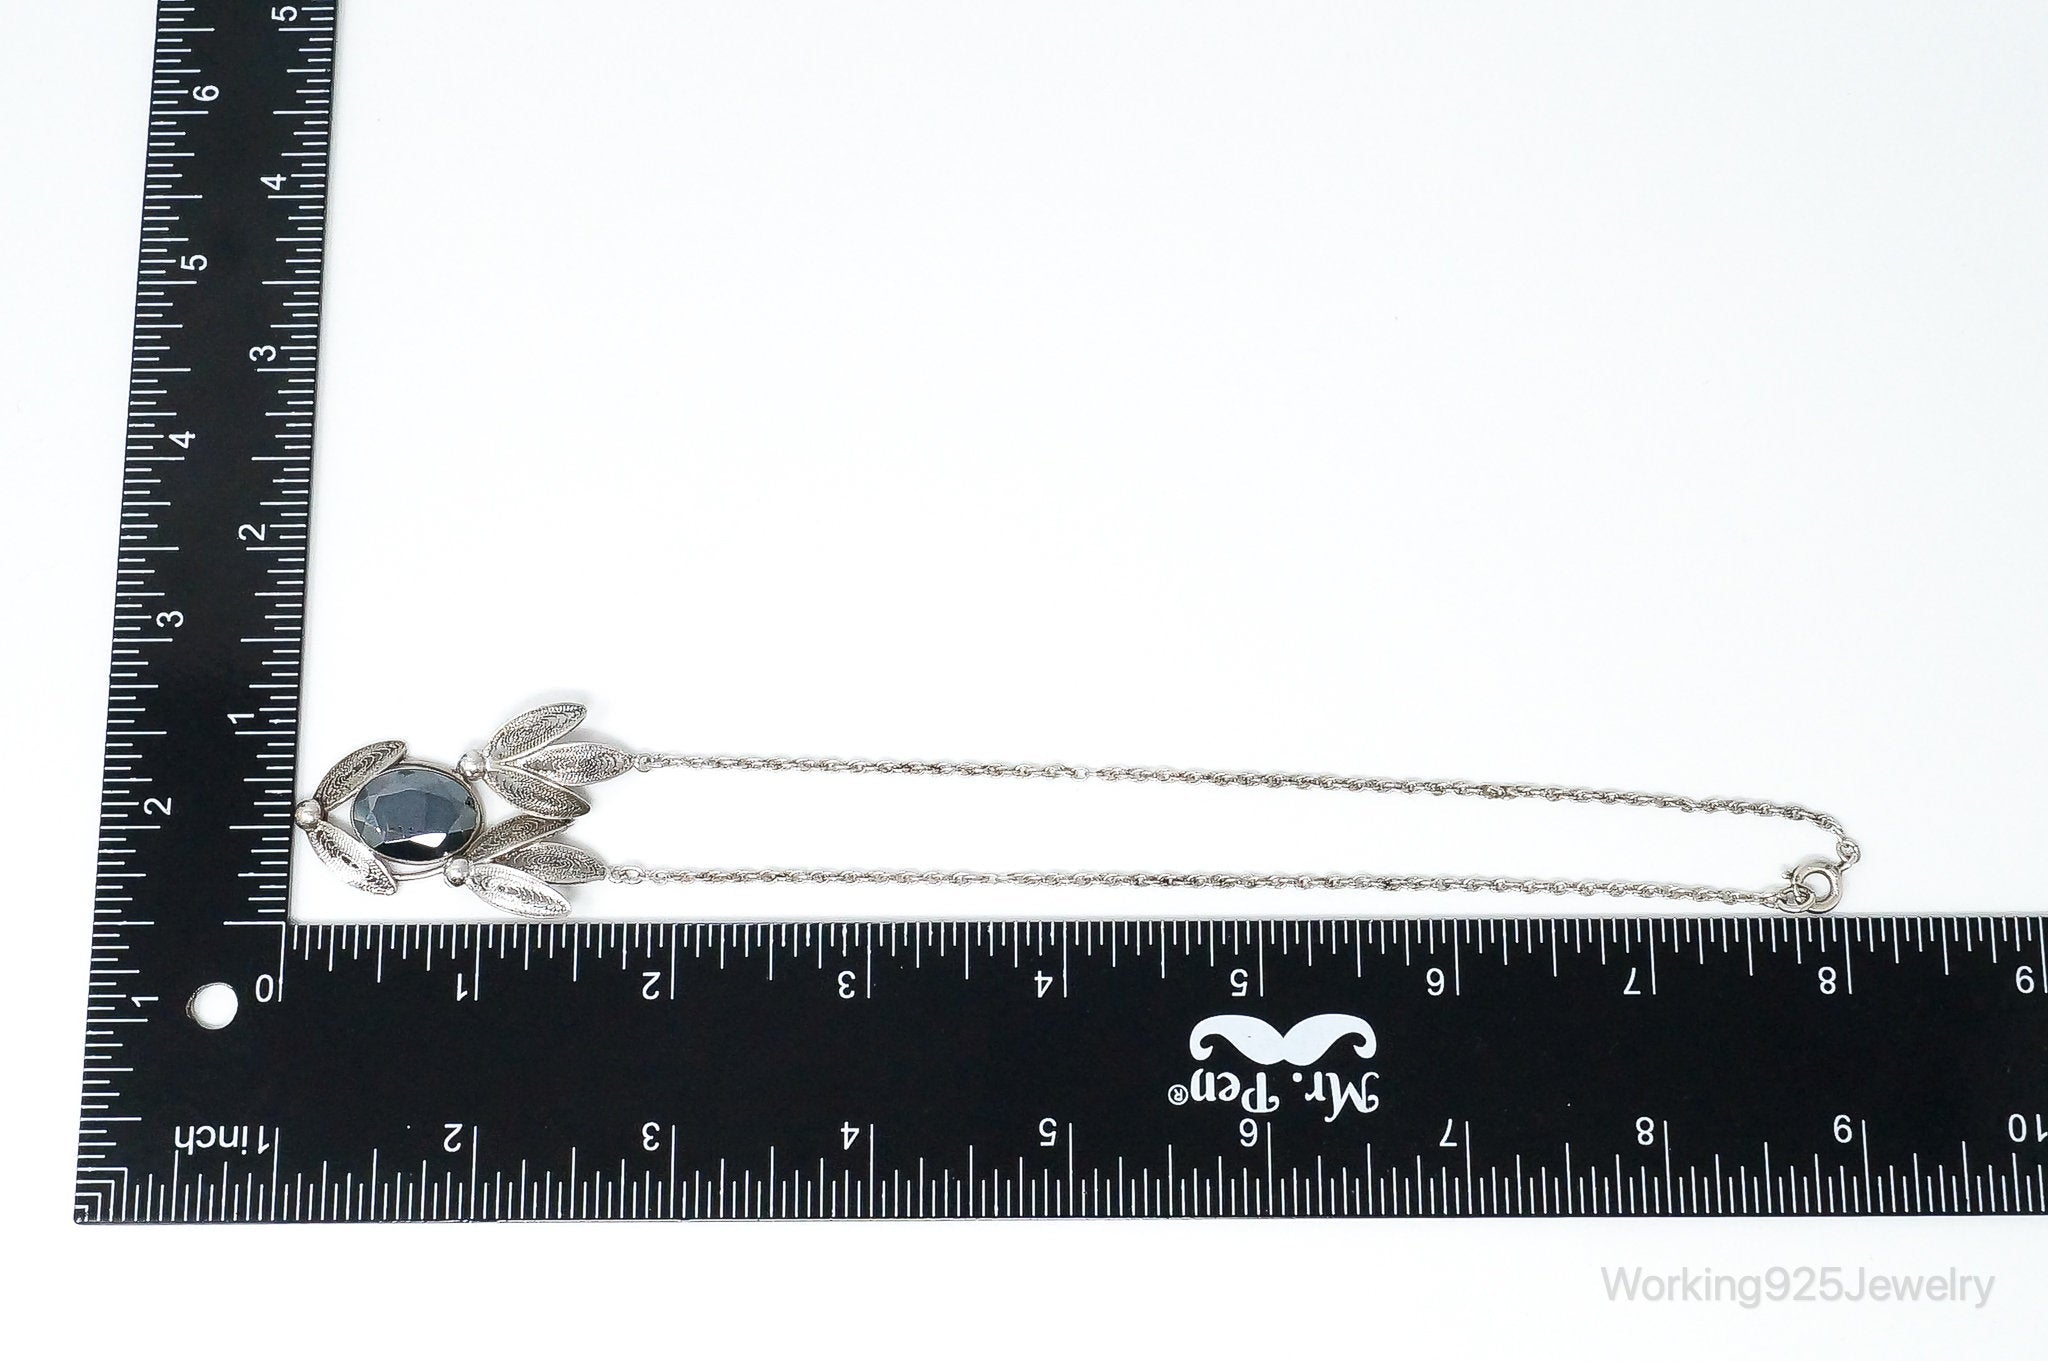 Antique Hematite Sterling Silver Filigree Necklace